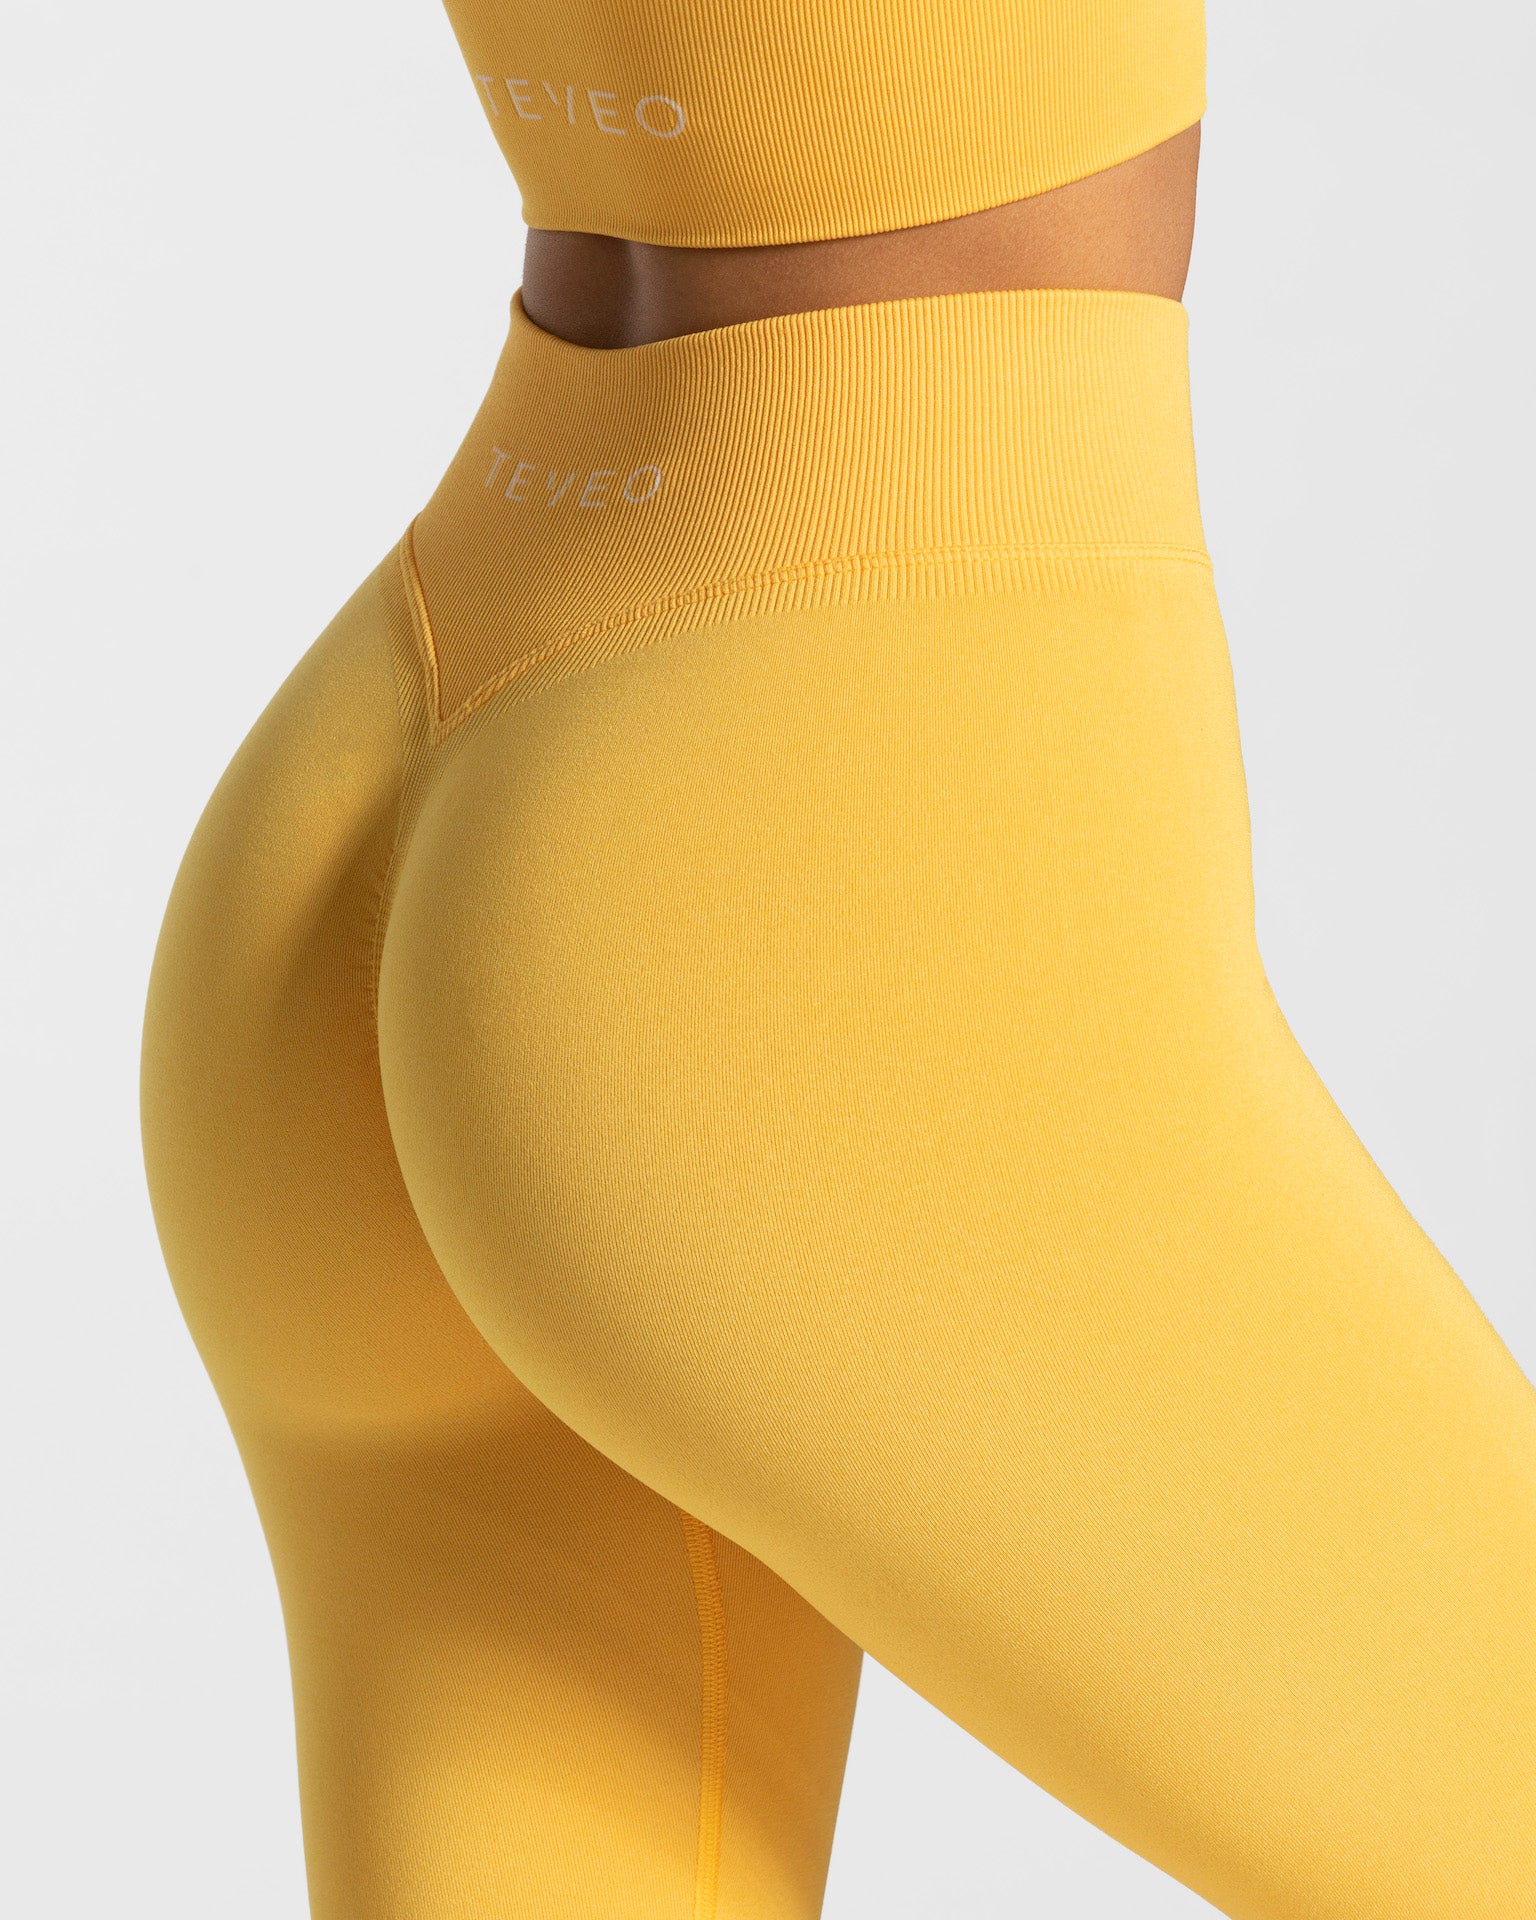 Statement Scrunch Short Gelb – TEVEO Official Store